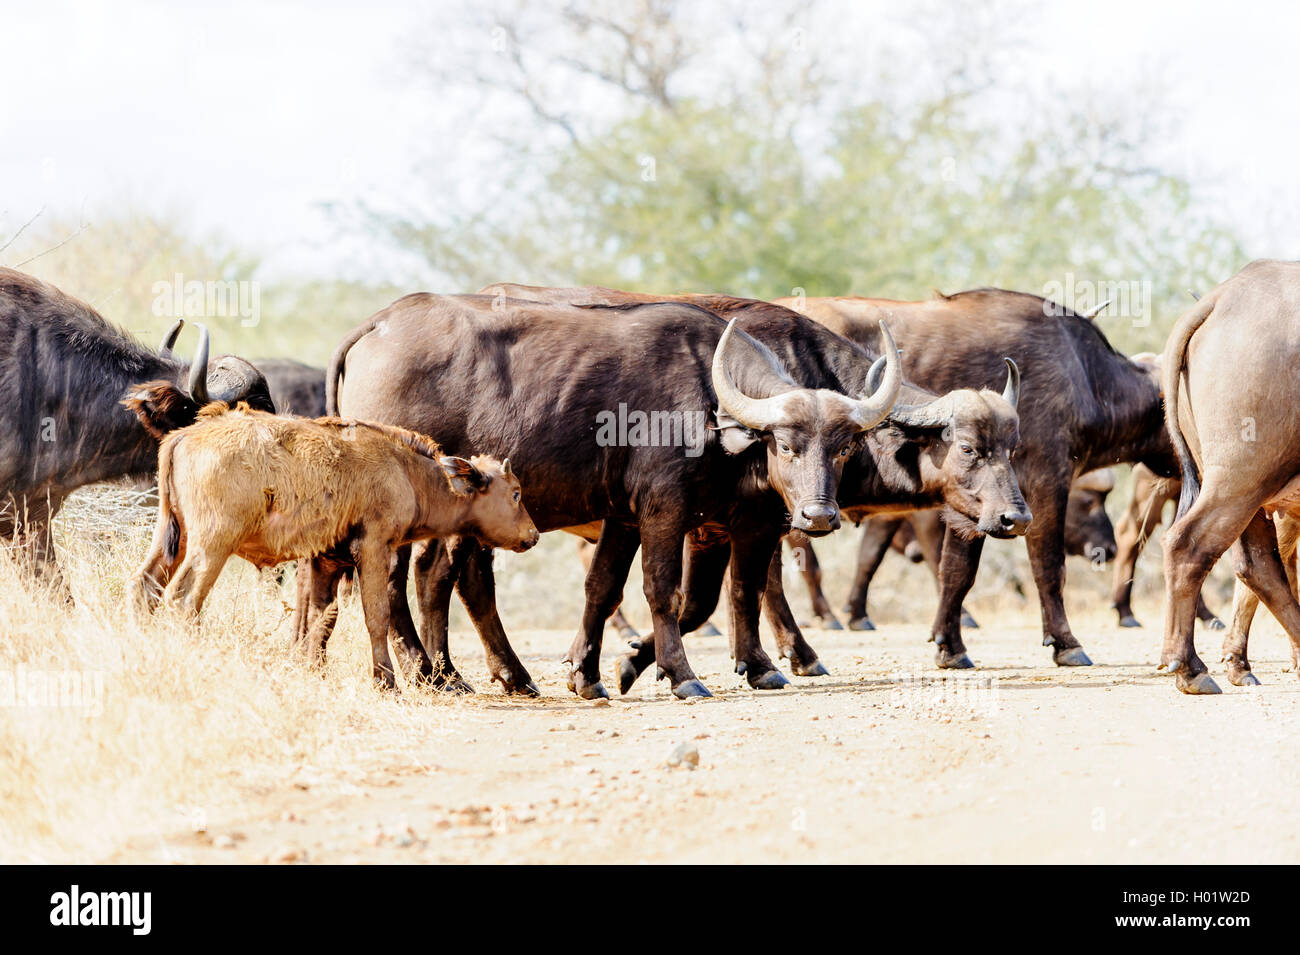 Búfalo africano joven o búfalo de cabo con un grupo de búfalos adultos, Sudáfrica Foto de stock